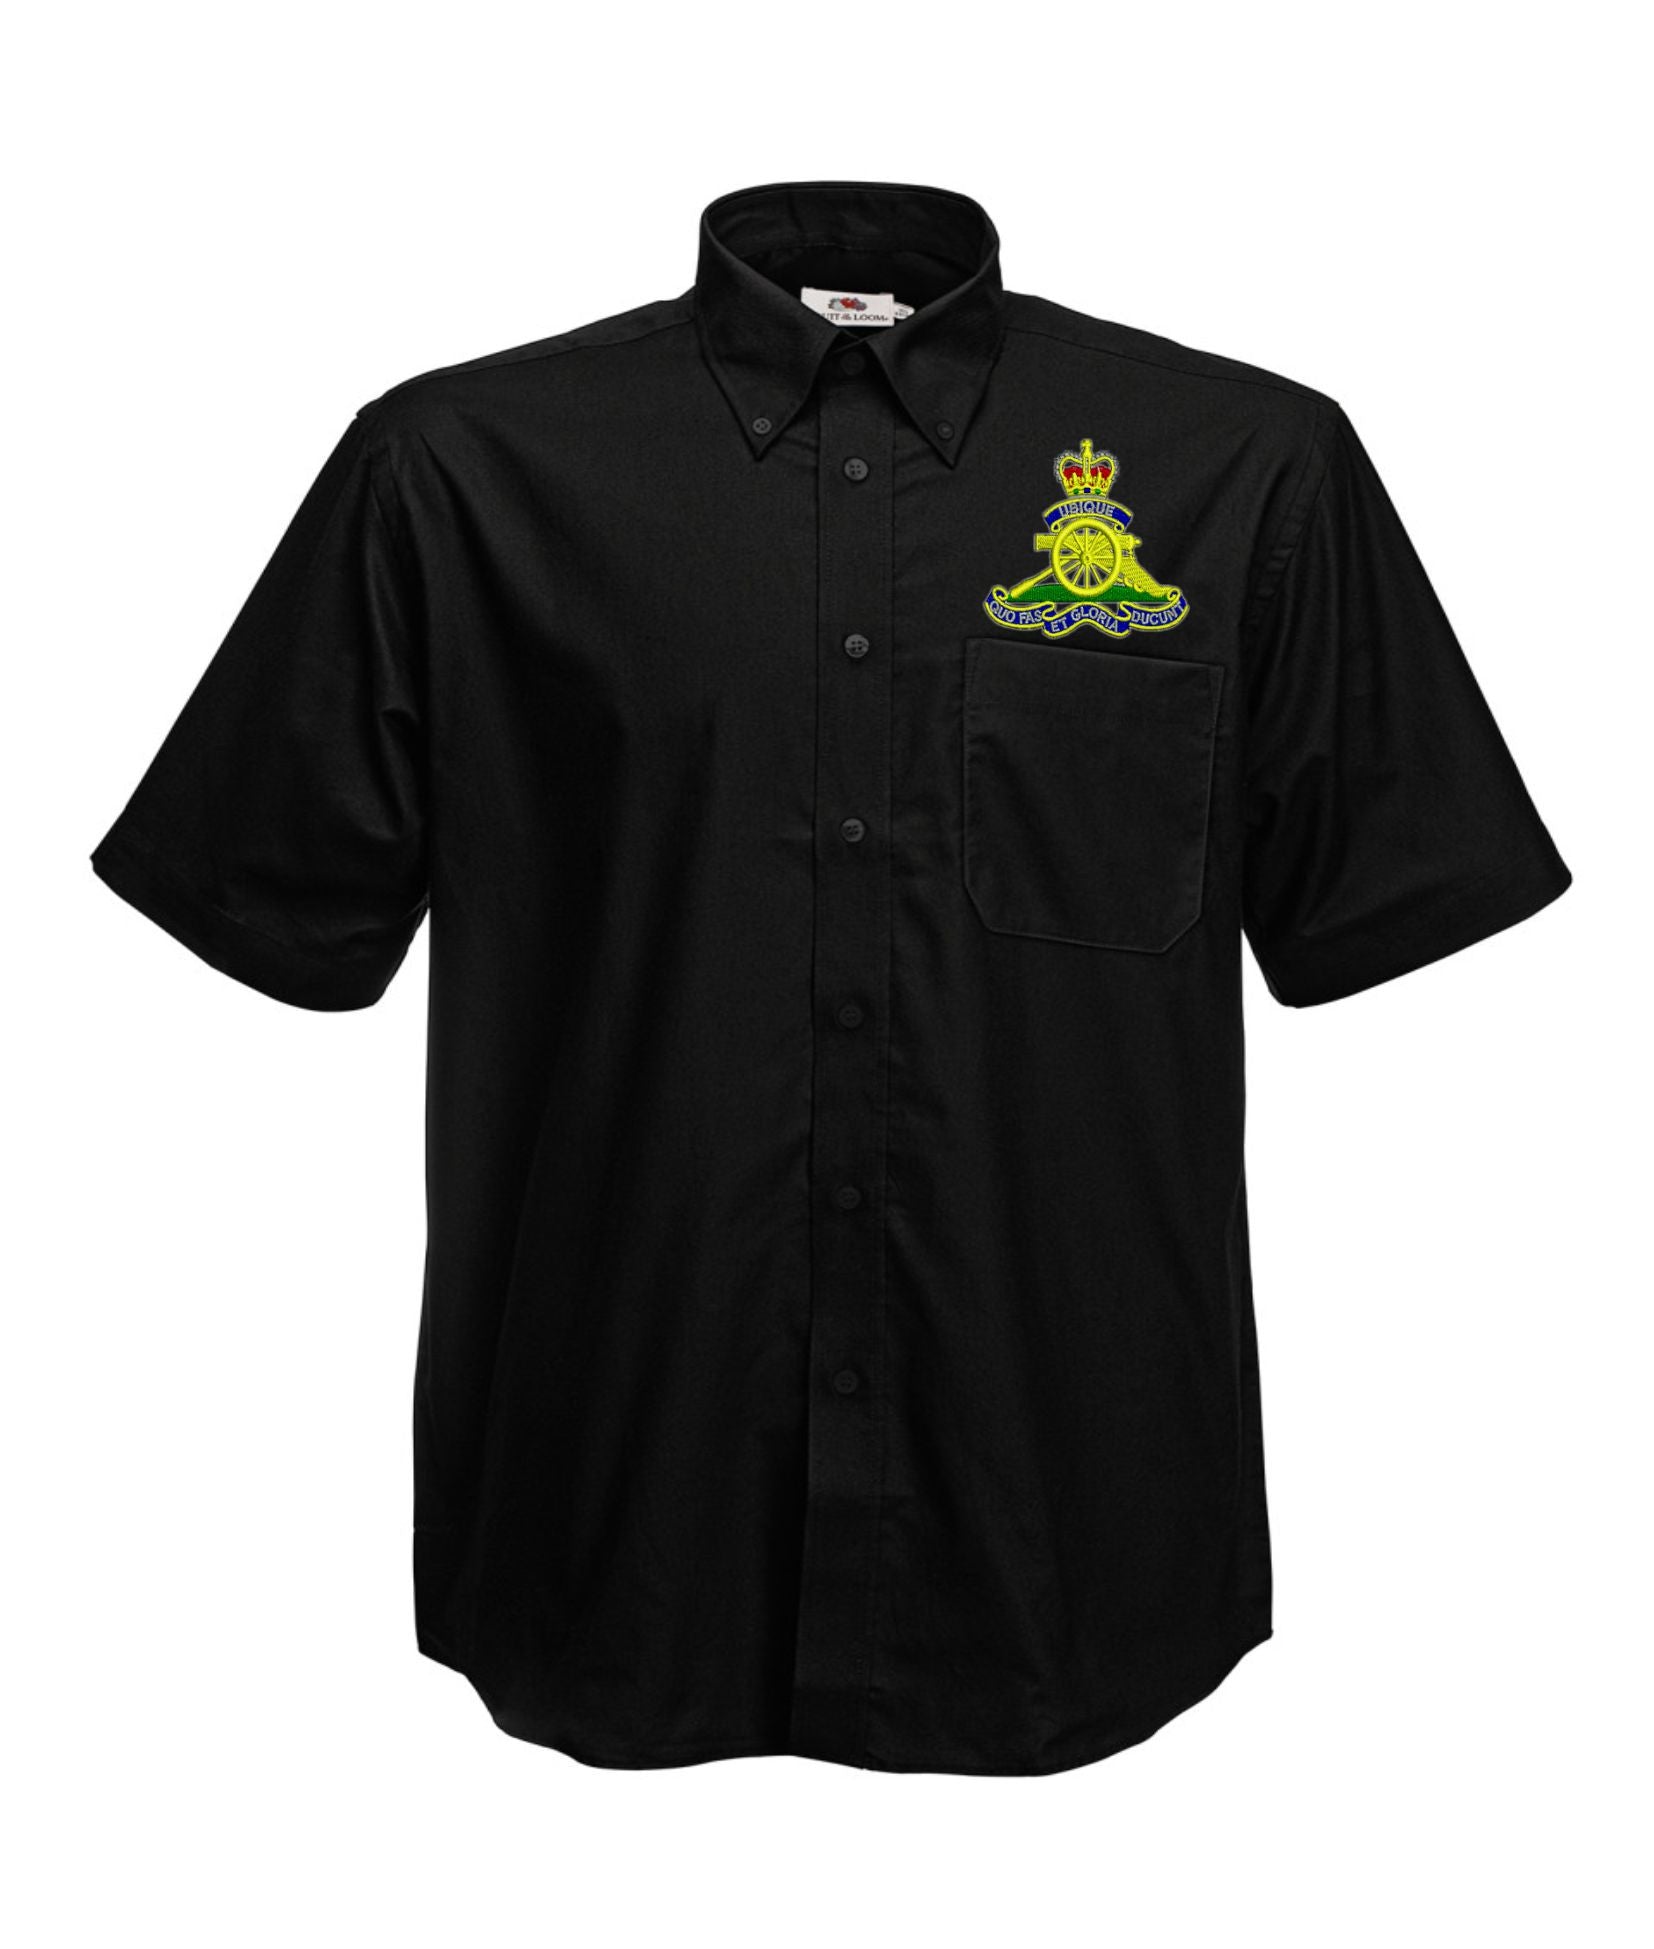 Royal Artillery Shirts